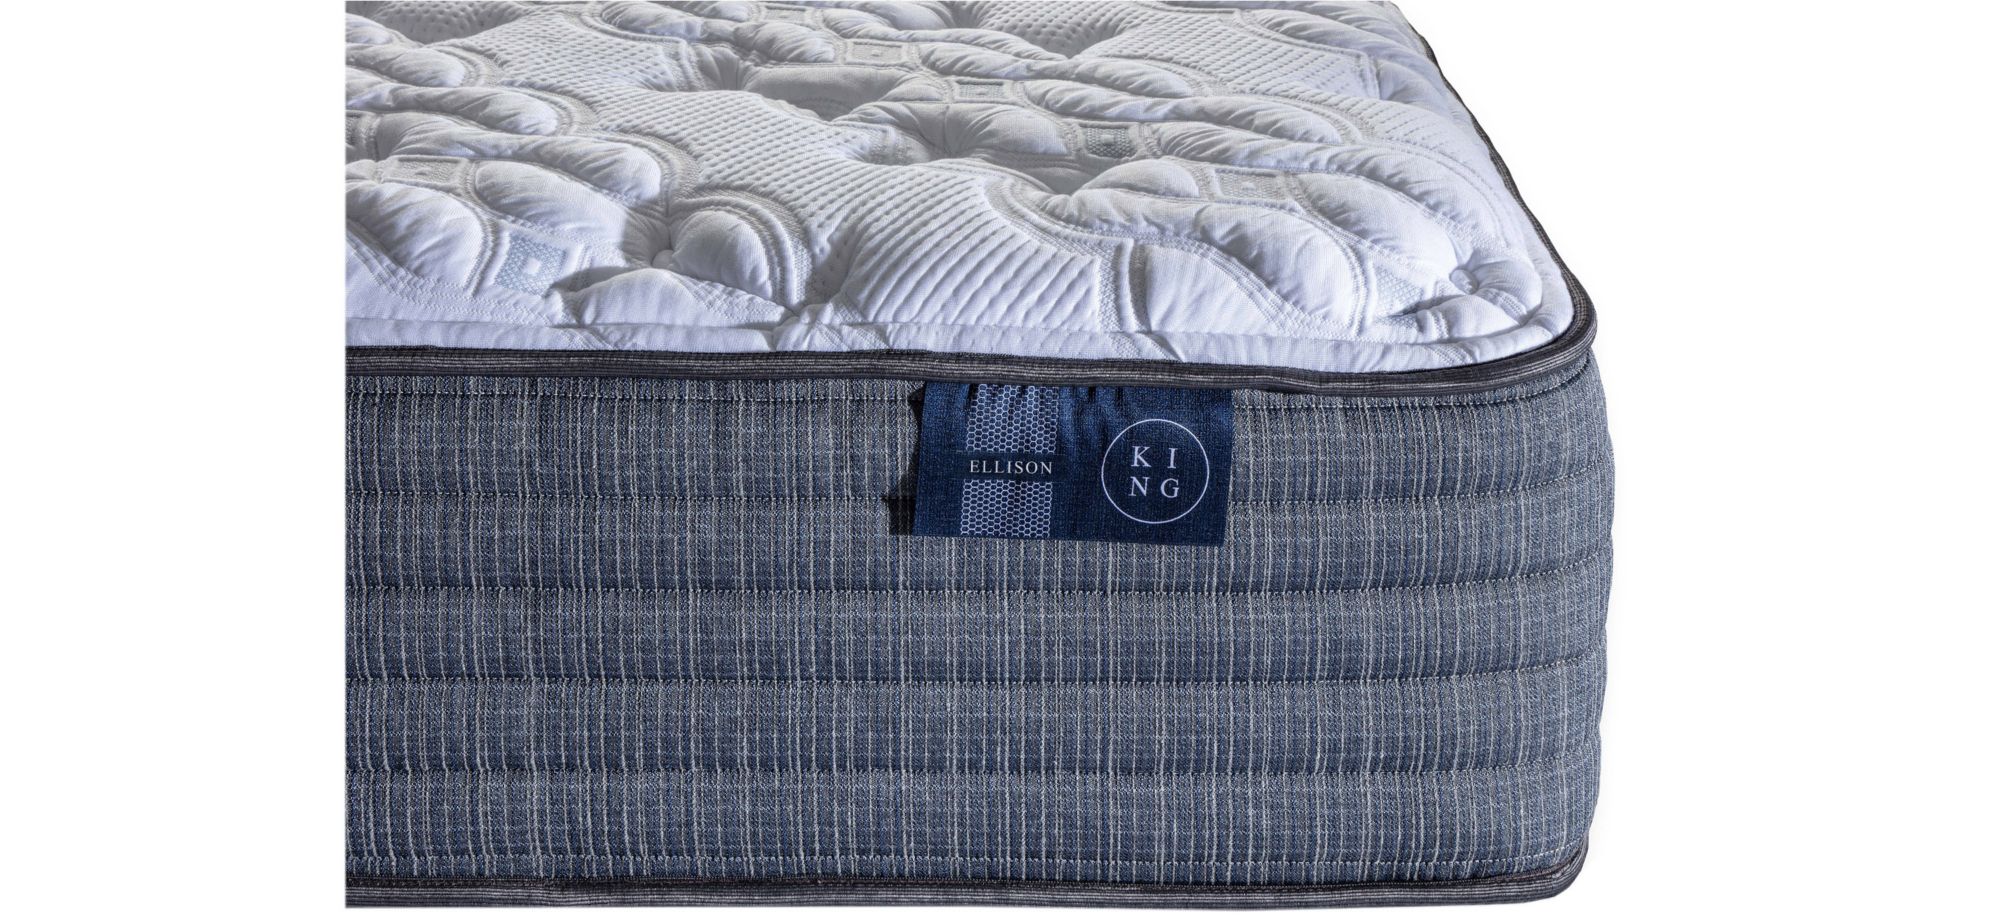 king koil elite lux - ellison luxury firm mattress